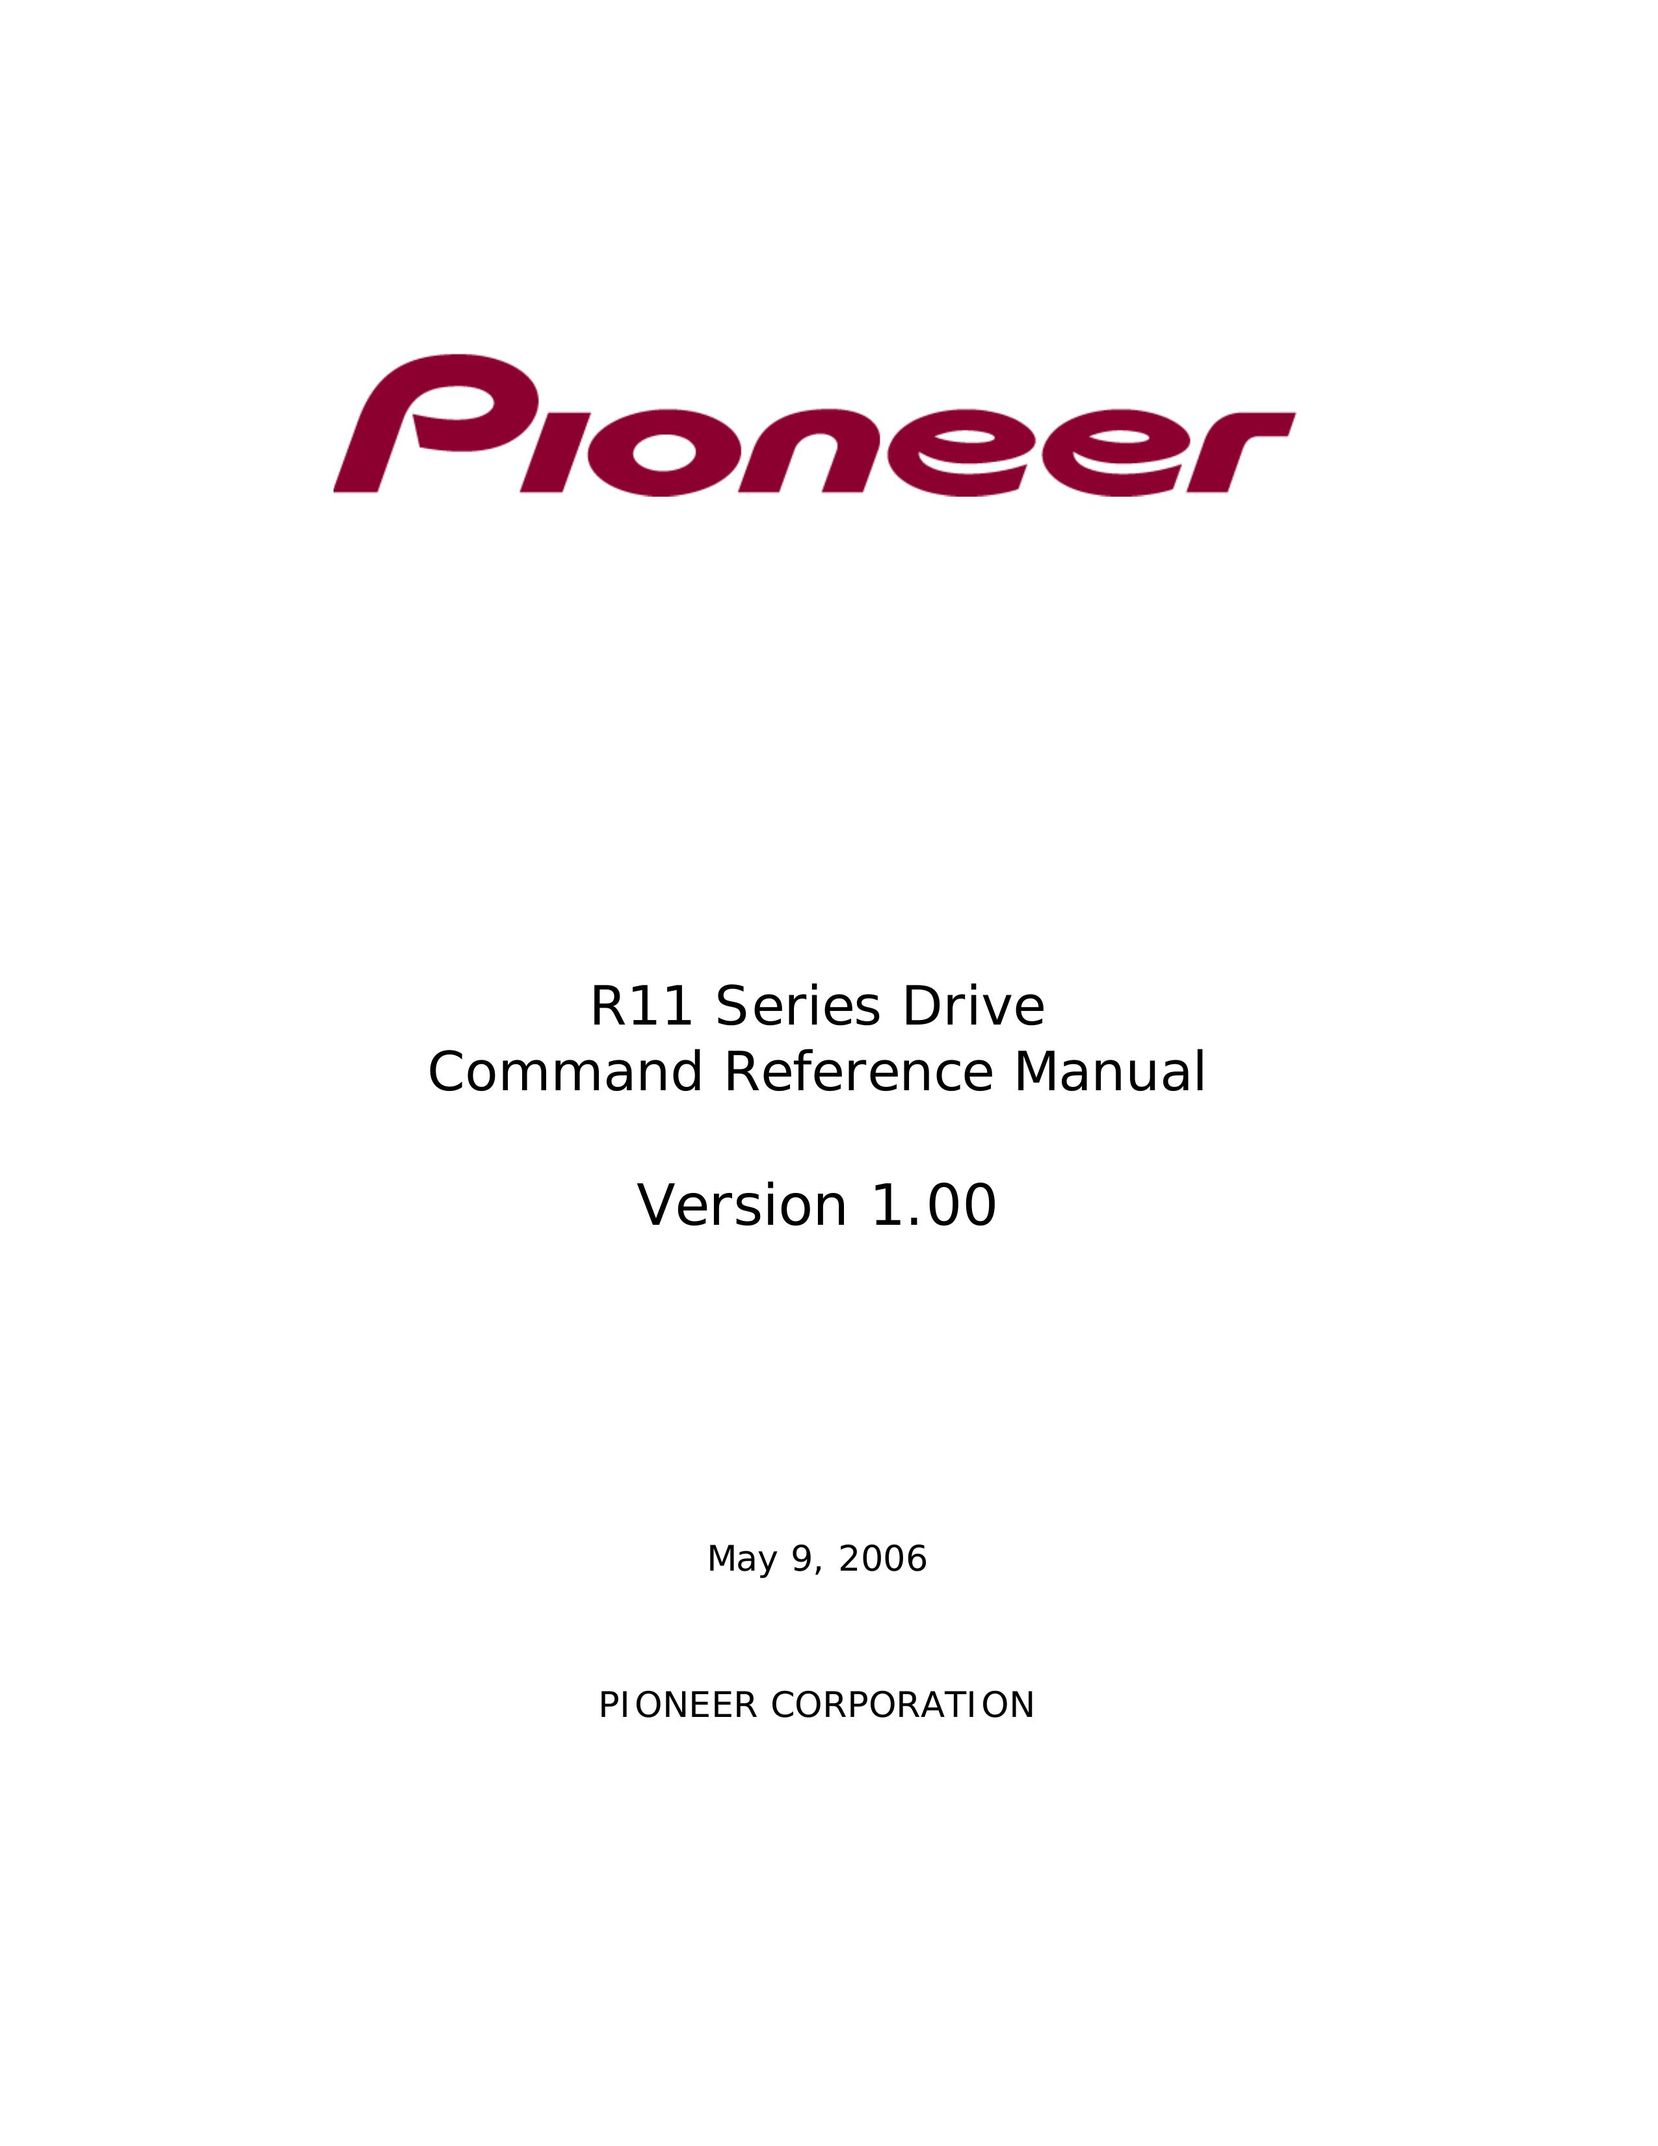 Pioneer r11 Computer Drive User Manual